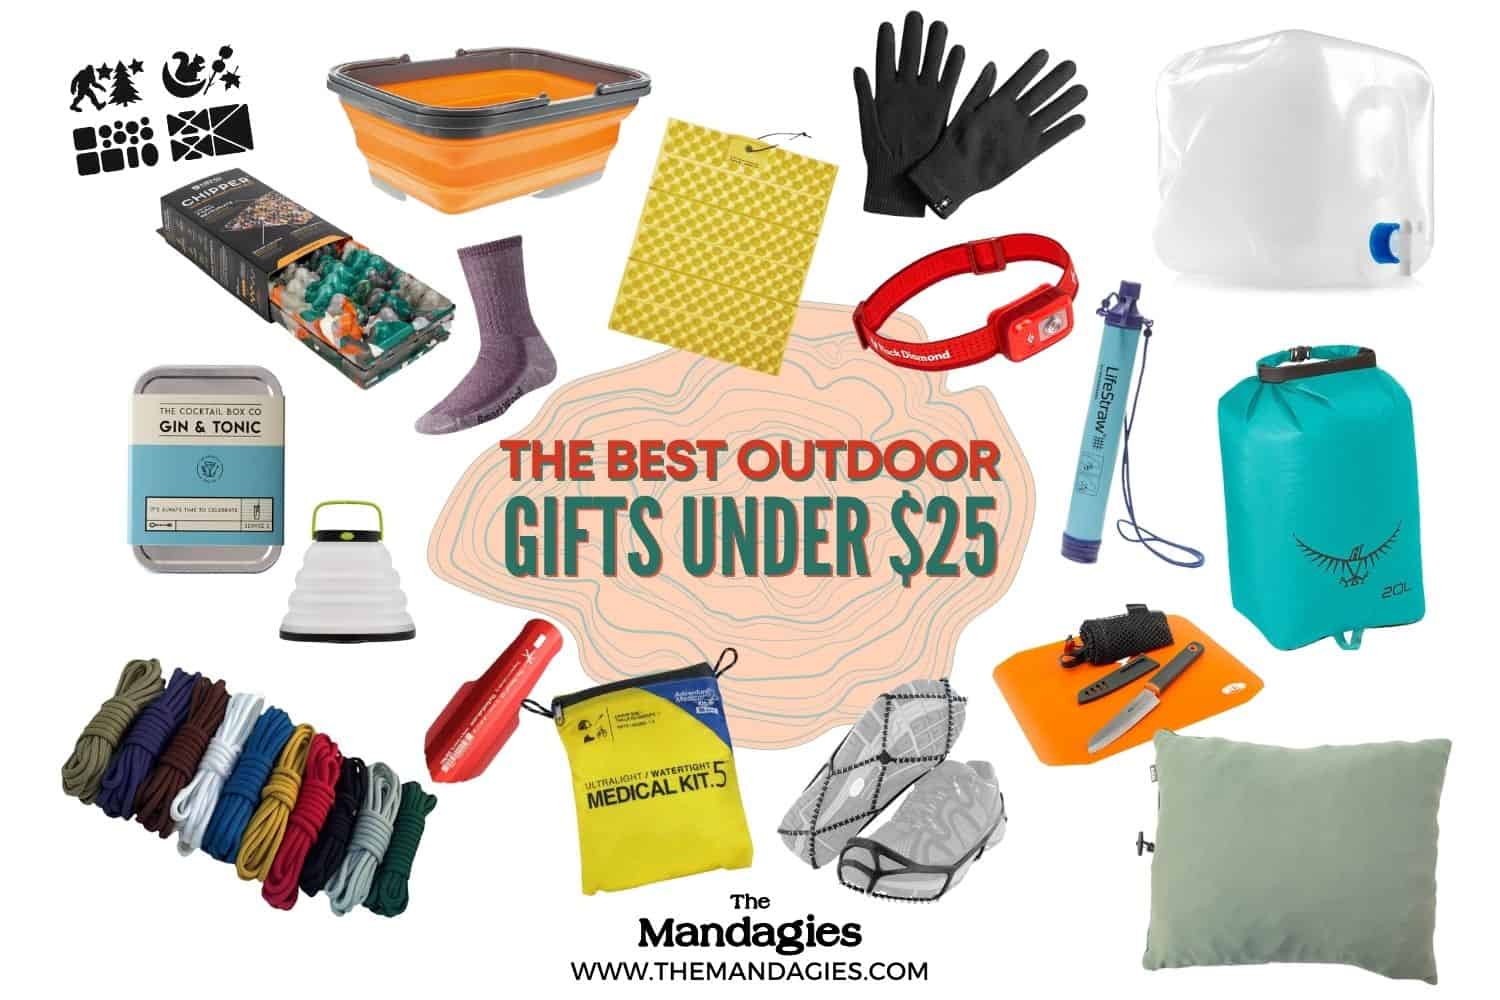 https://www.themandagies.com/wp-content/uploads/2021/09/Outdoor-Gifts-Under-25-The-Mandagies-Feature-Image.jpg